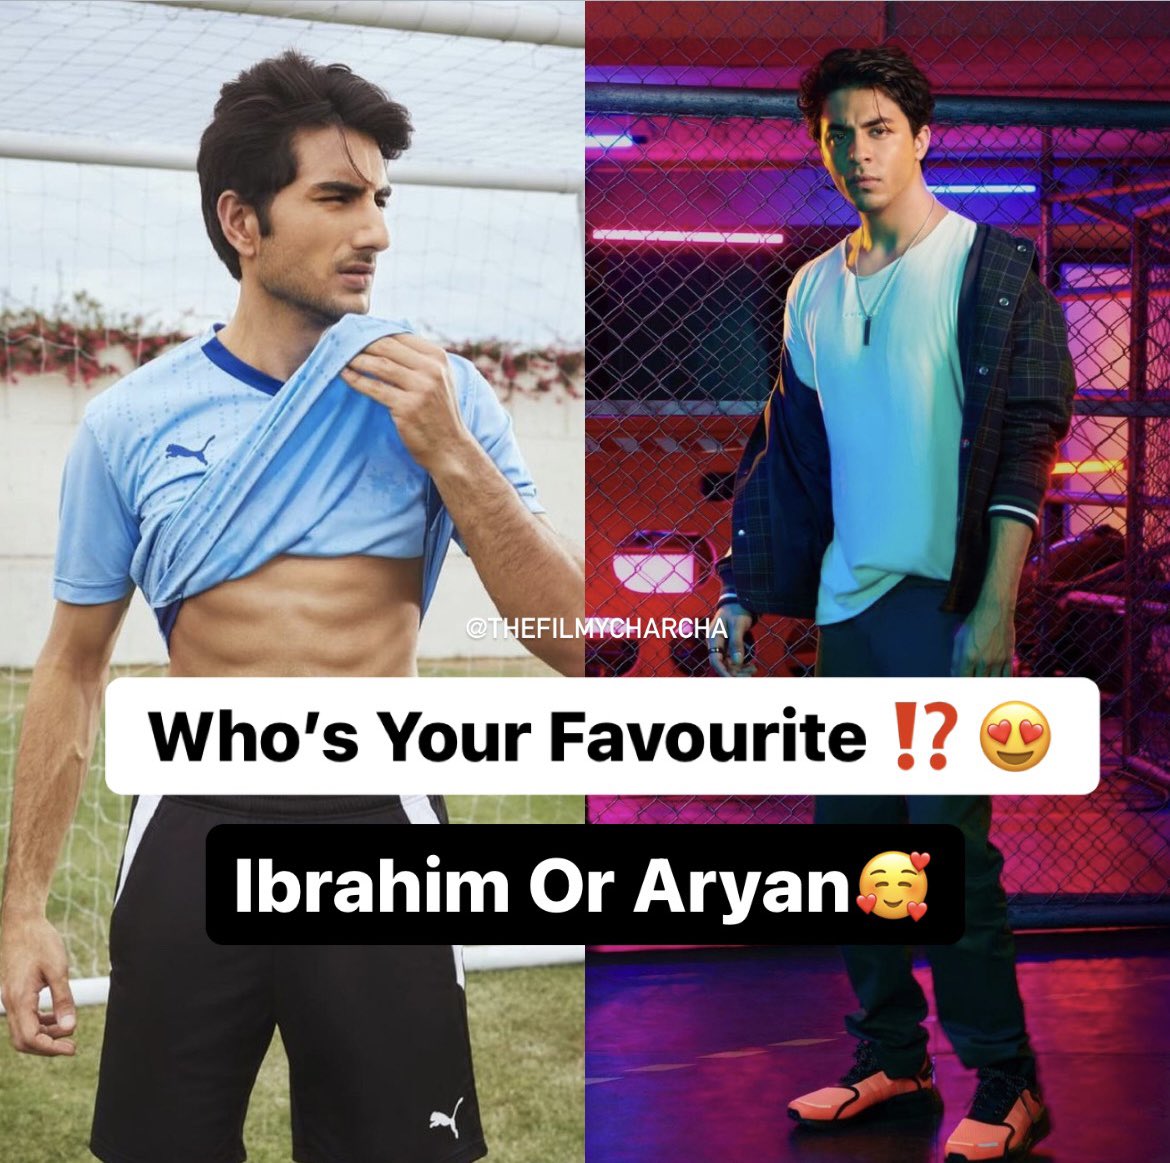 Who's Your Favourite⁉️😍
Aryan Or Ibrahim😎
Comment down below⬇️ 
#aryankhan #ibrahimalikhan #bollywood #trending